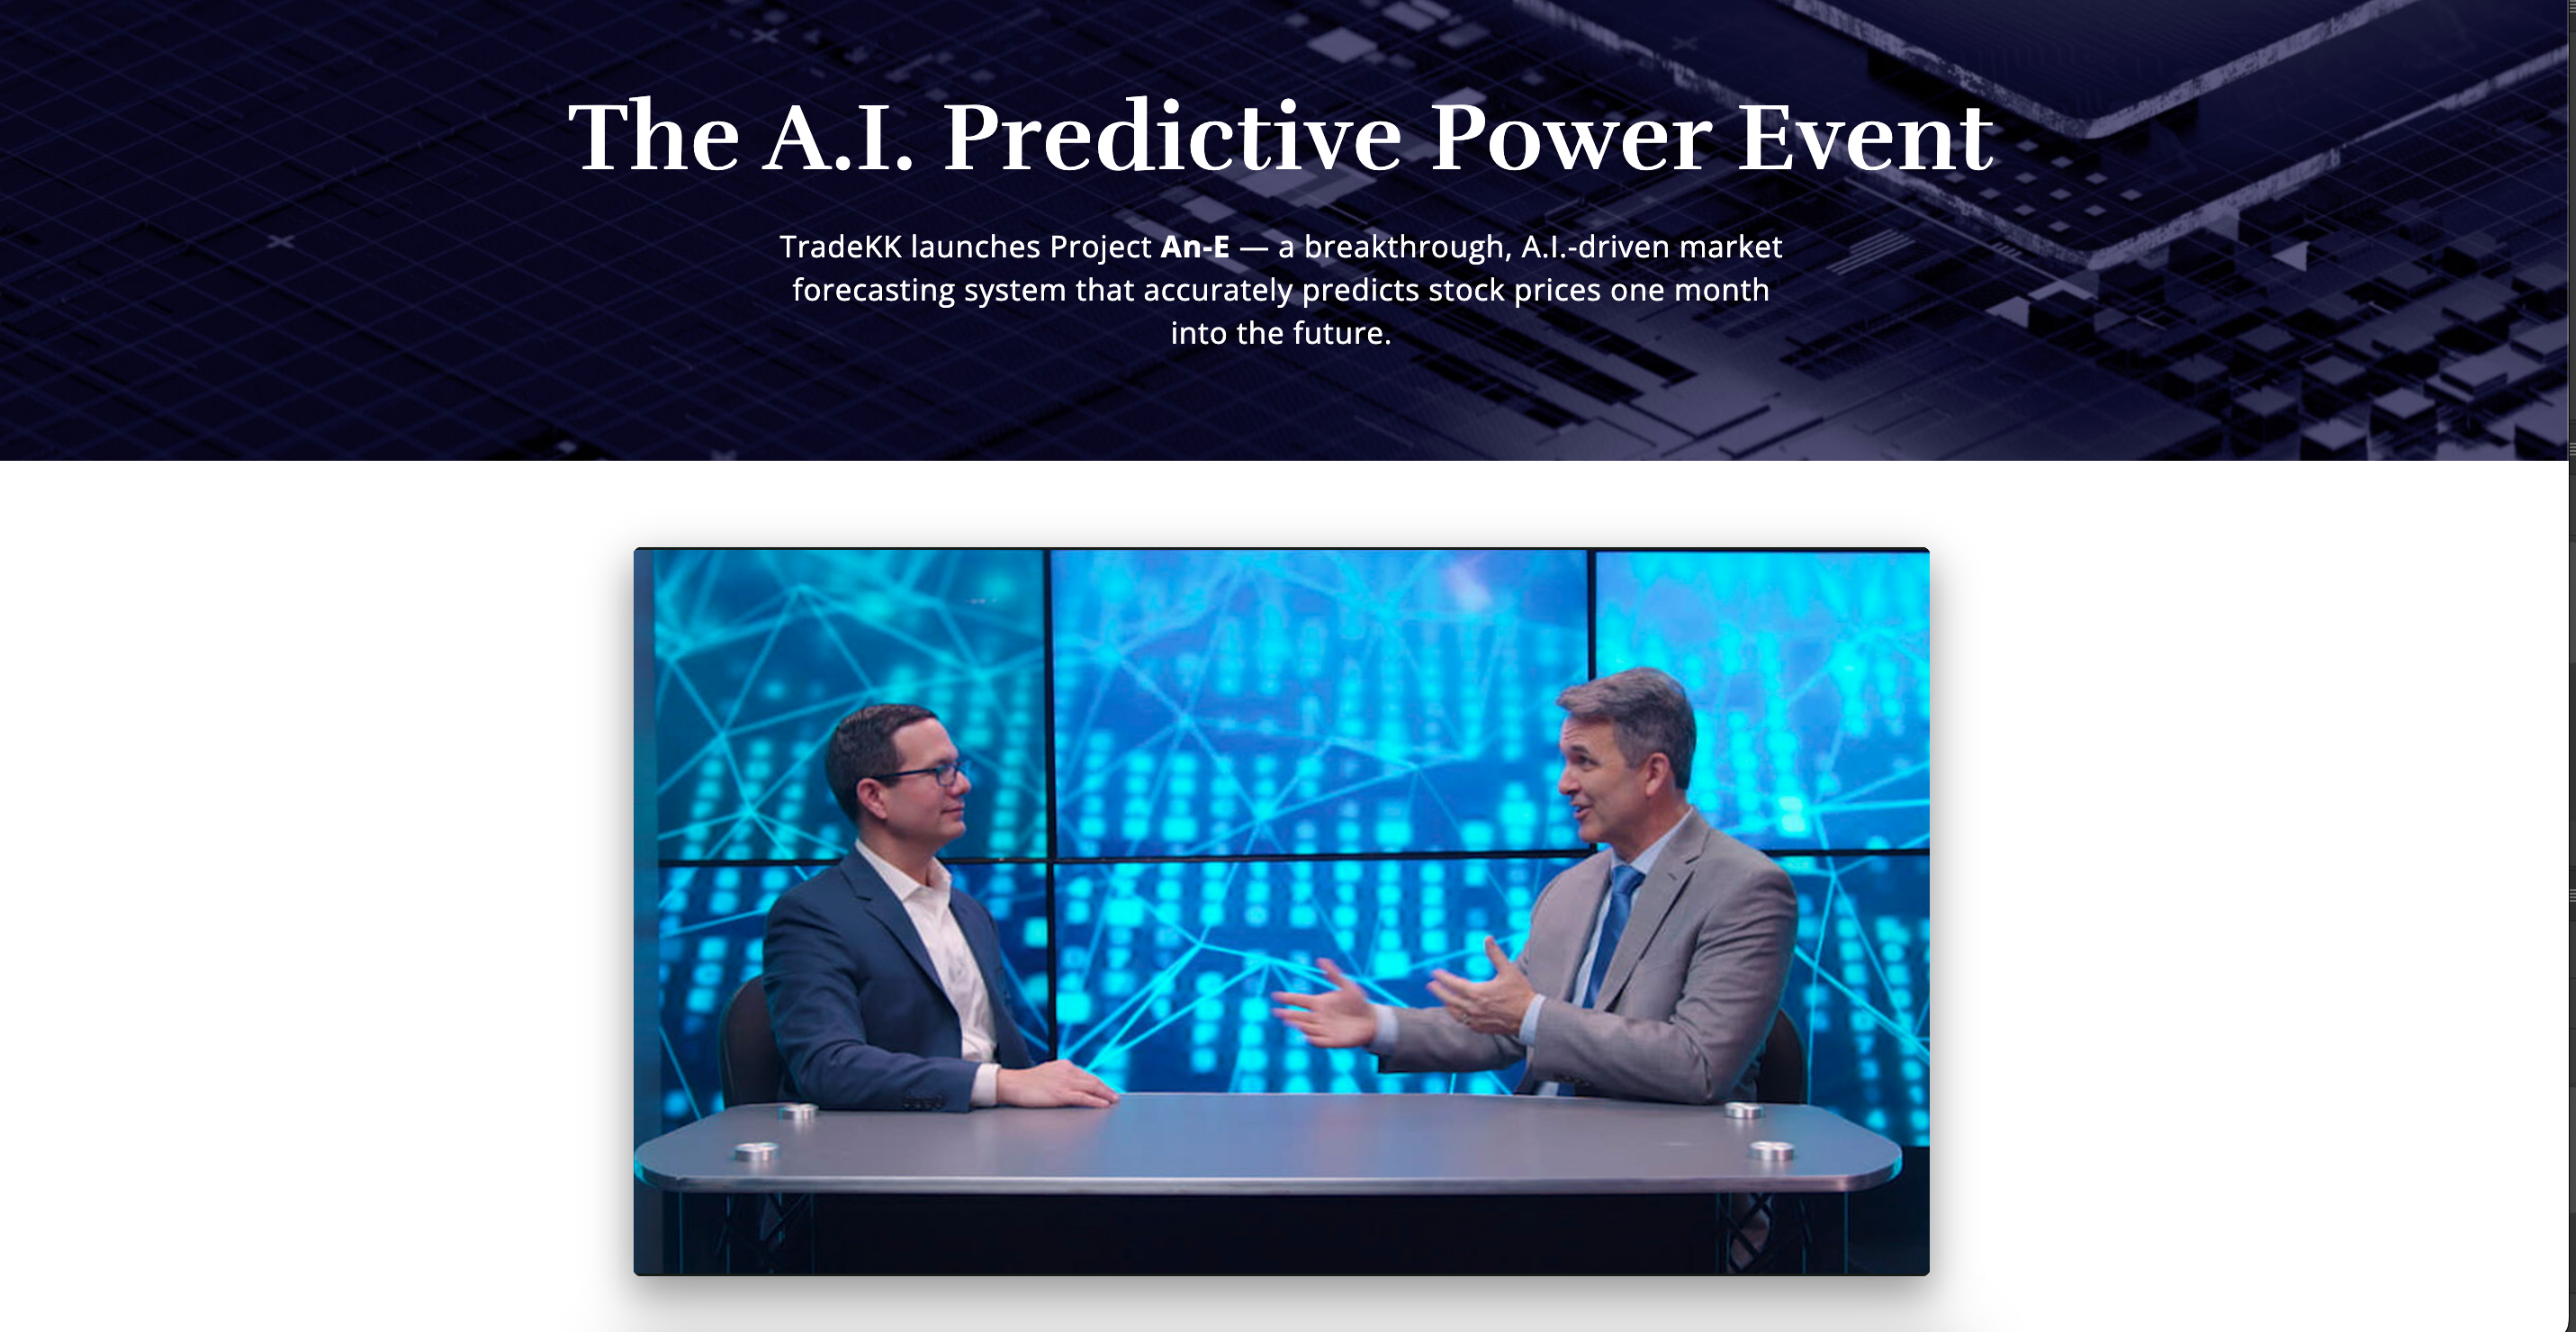 The A.I. Predictive Power Event